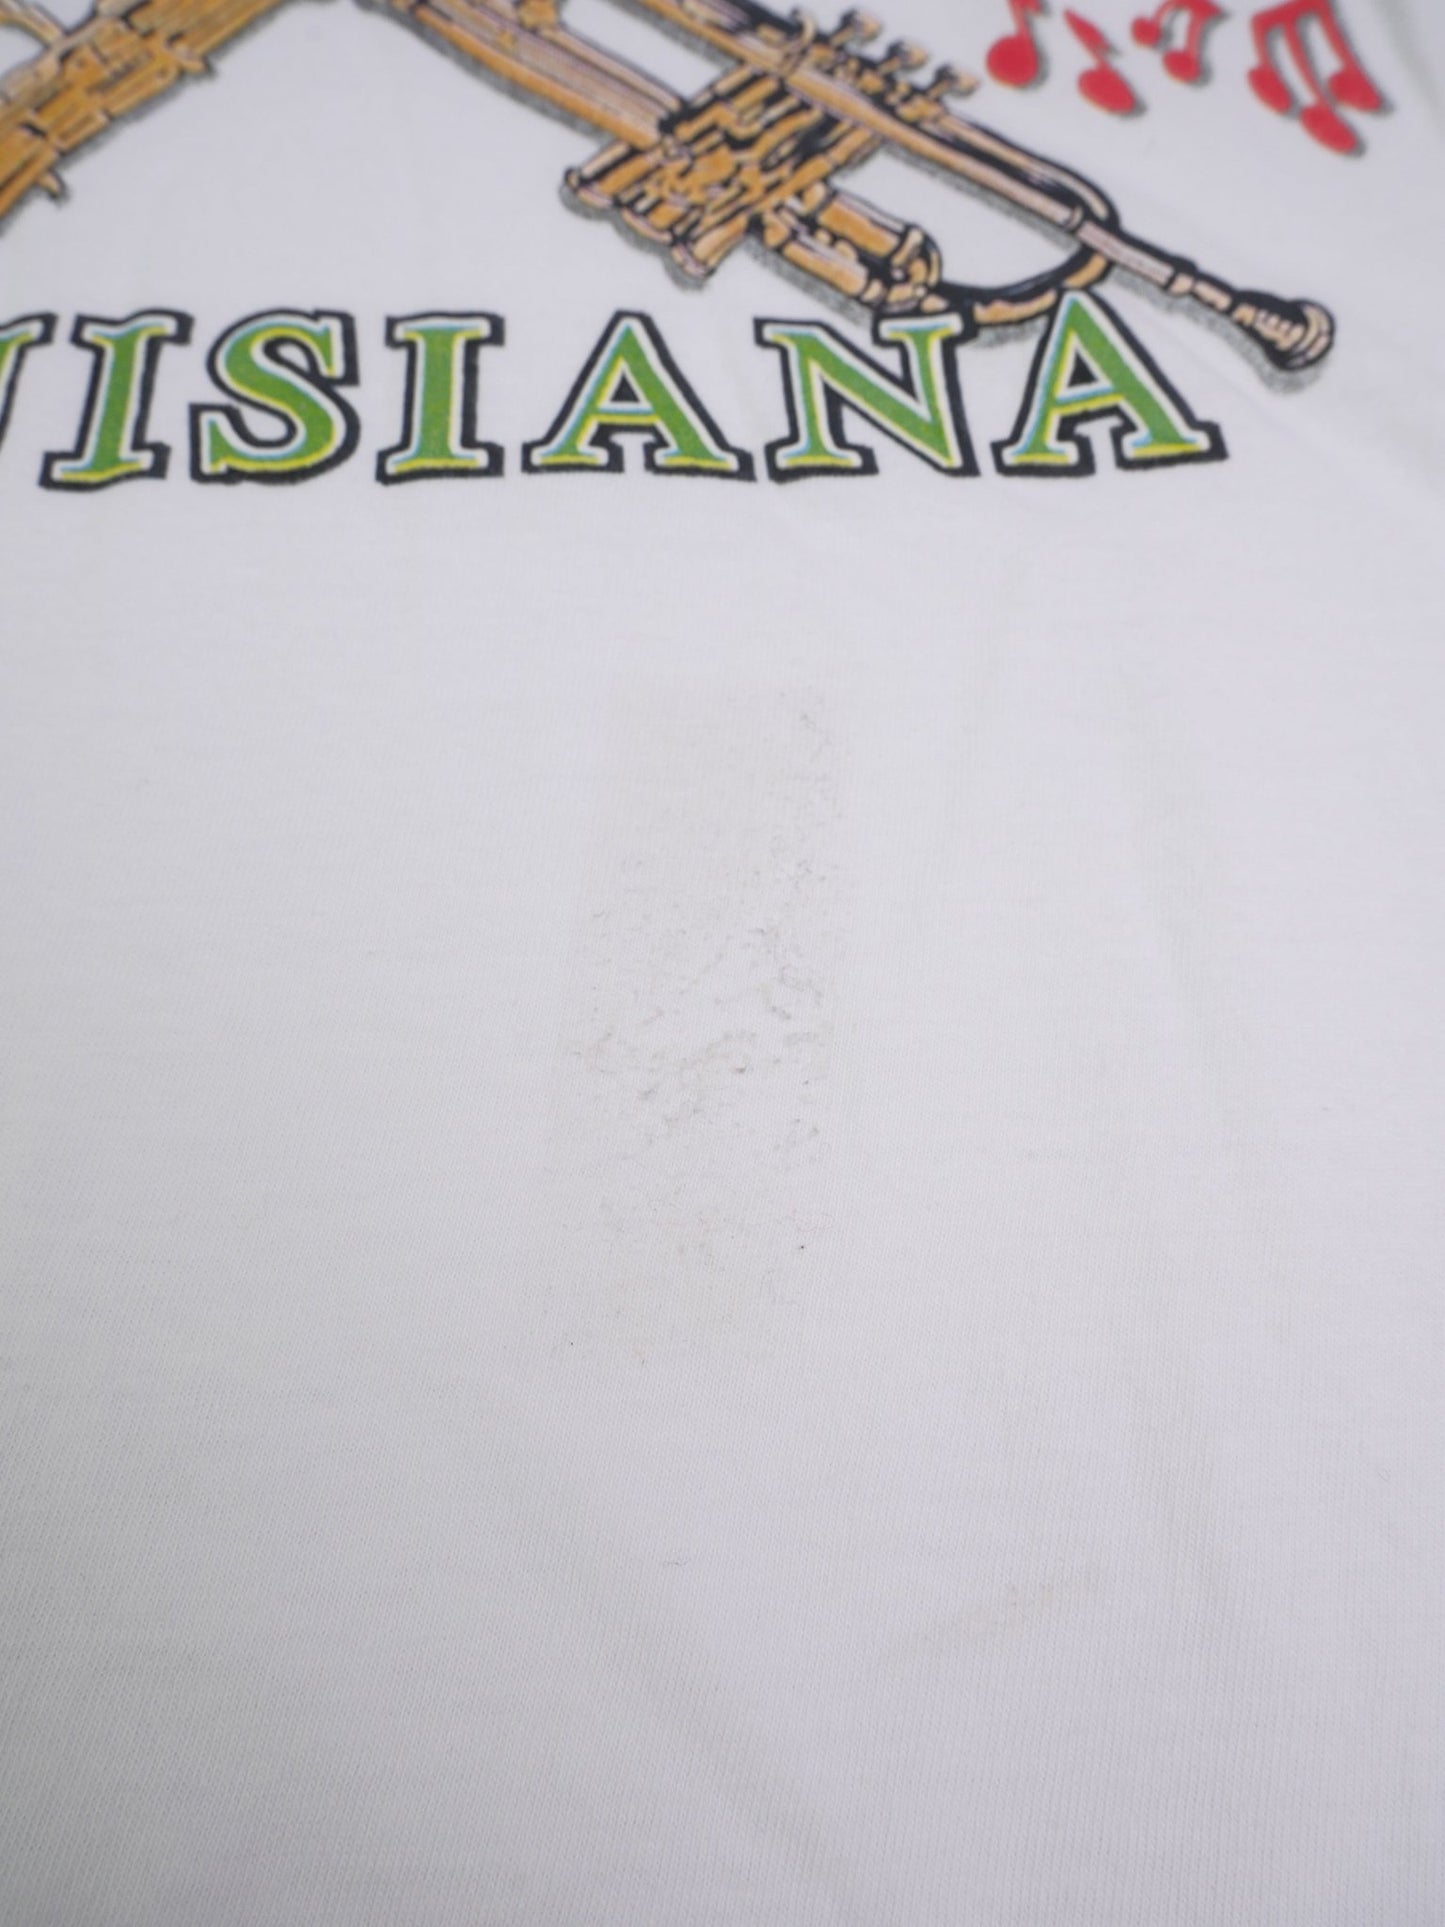 New Orleans printed Logo Shirt - Peeces